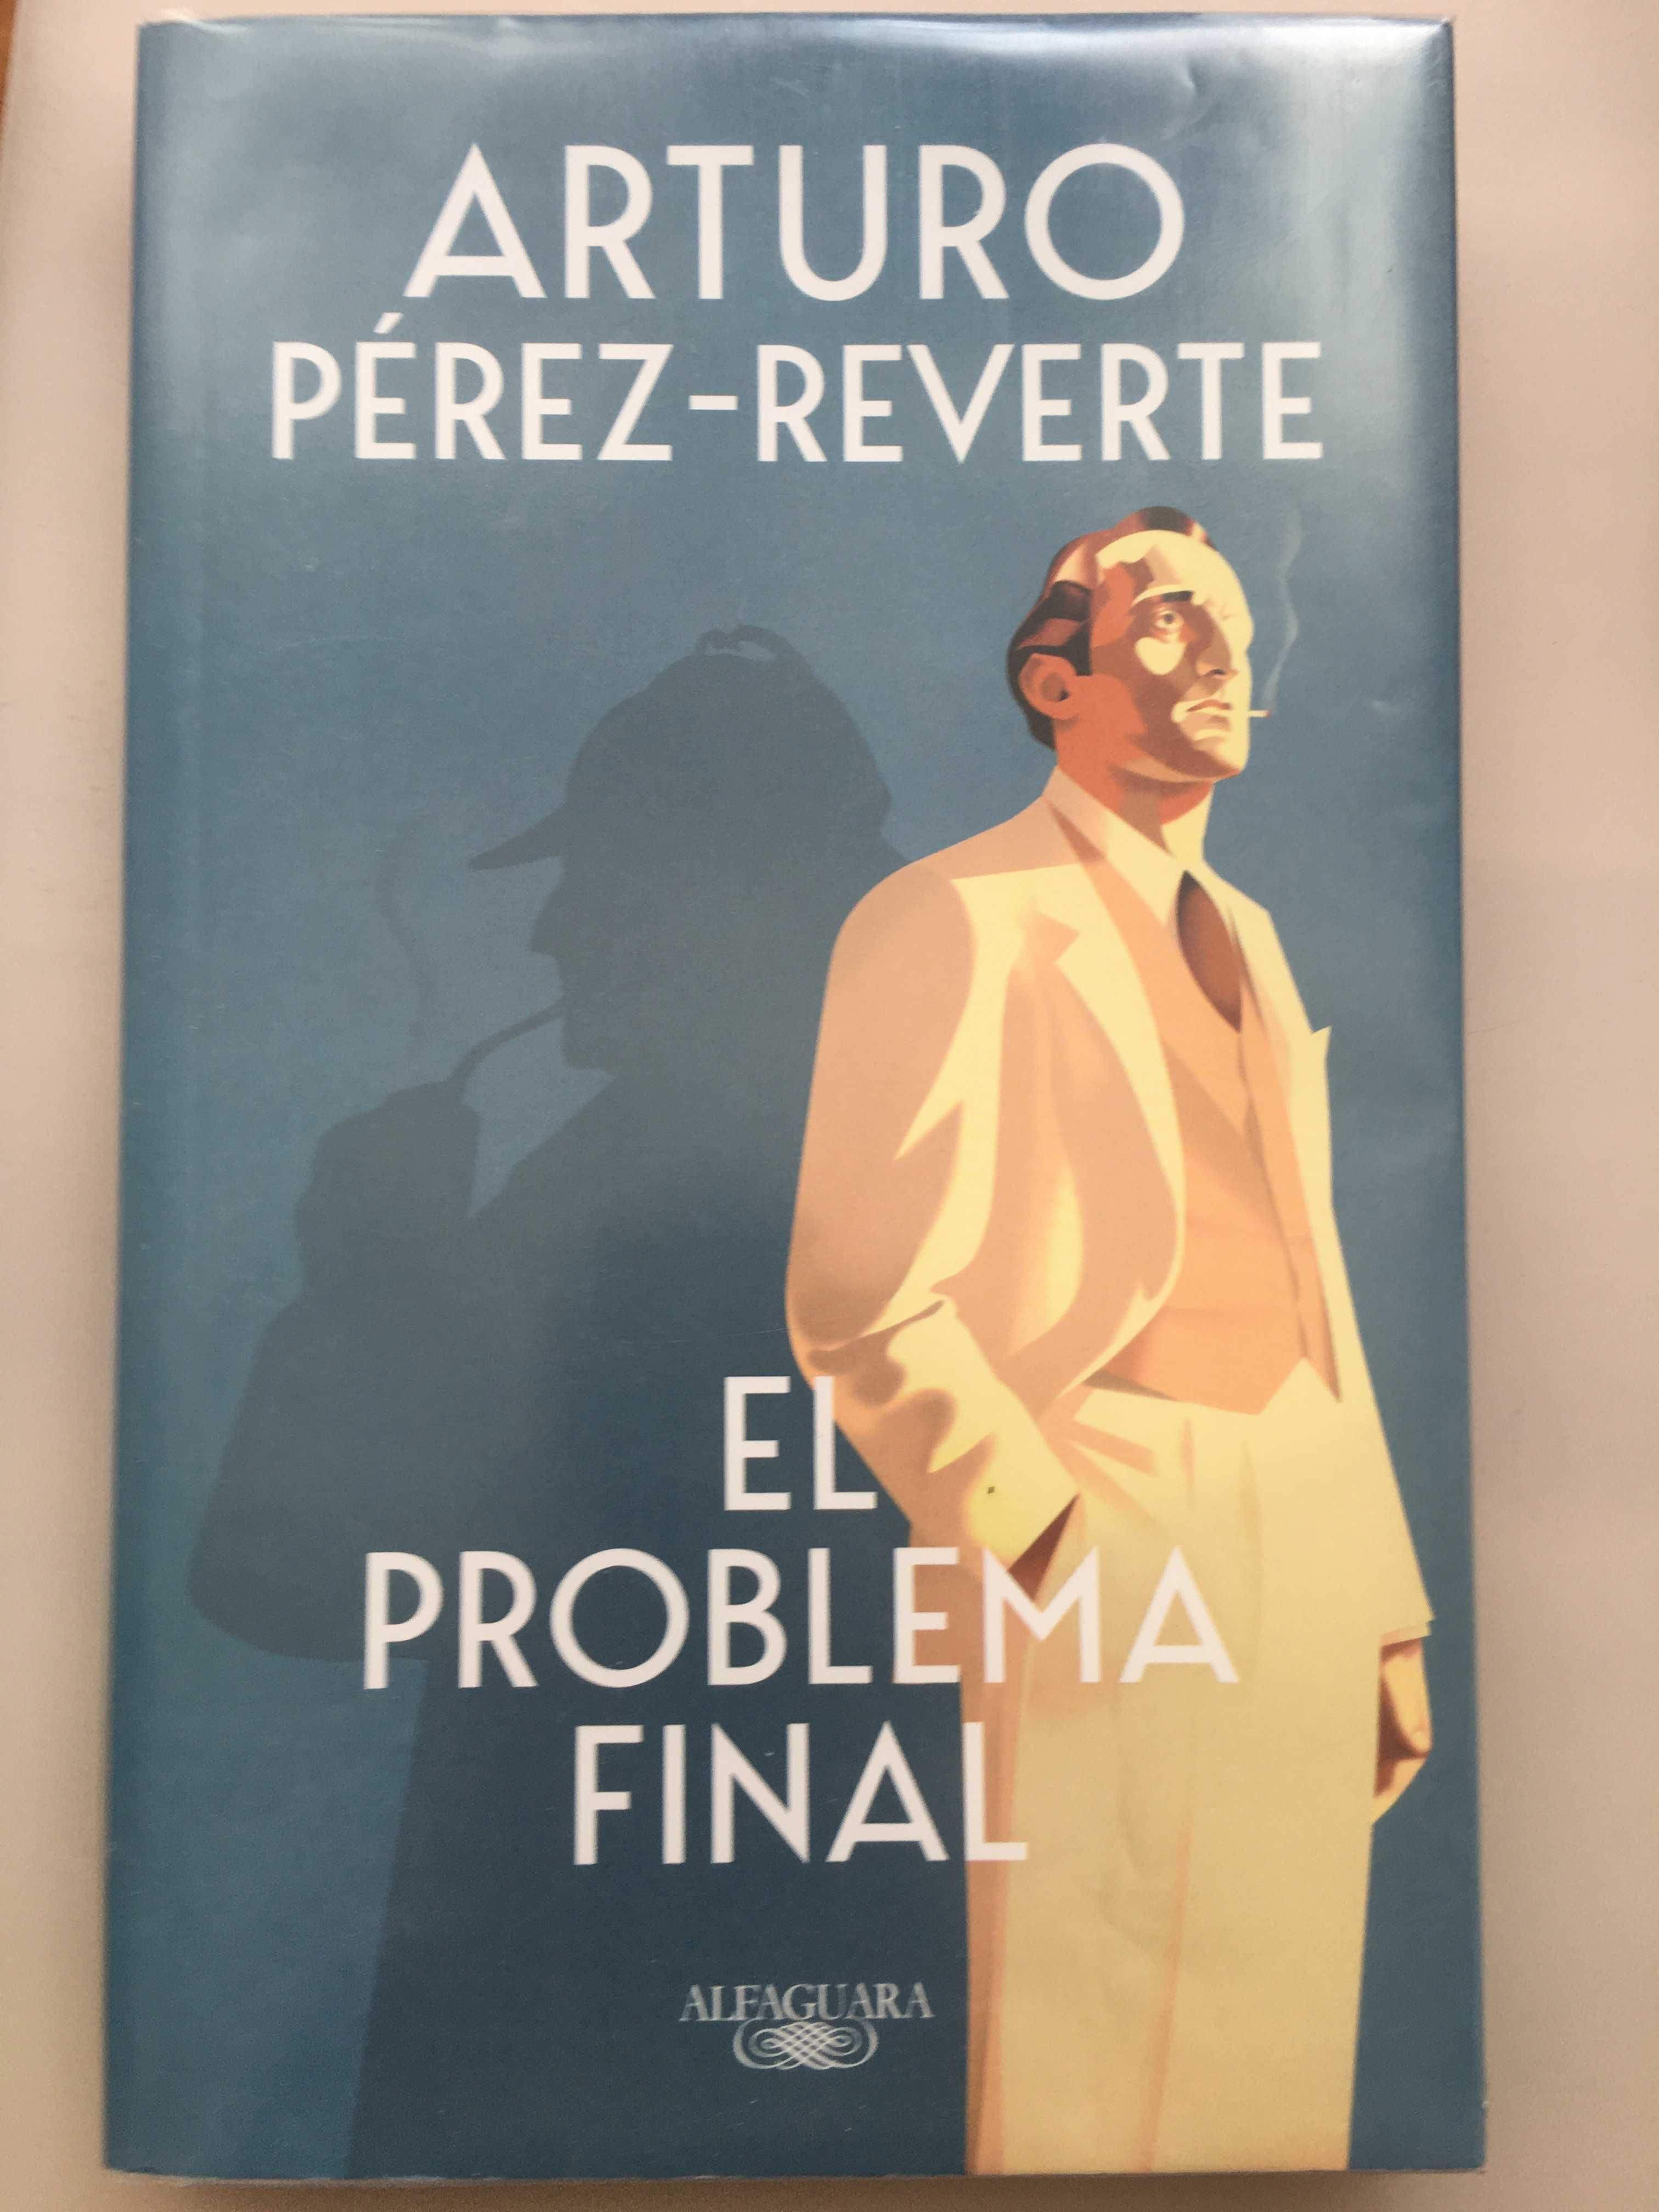 El Problema Final Arturo Arturo Pérez-Reverte książka po hiszpańsku